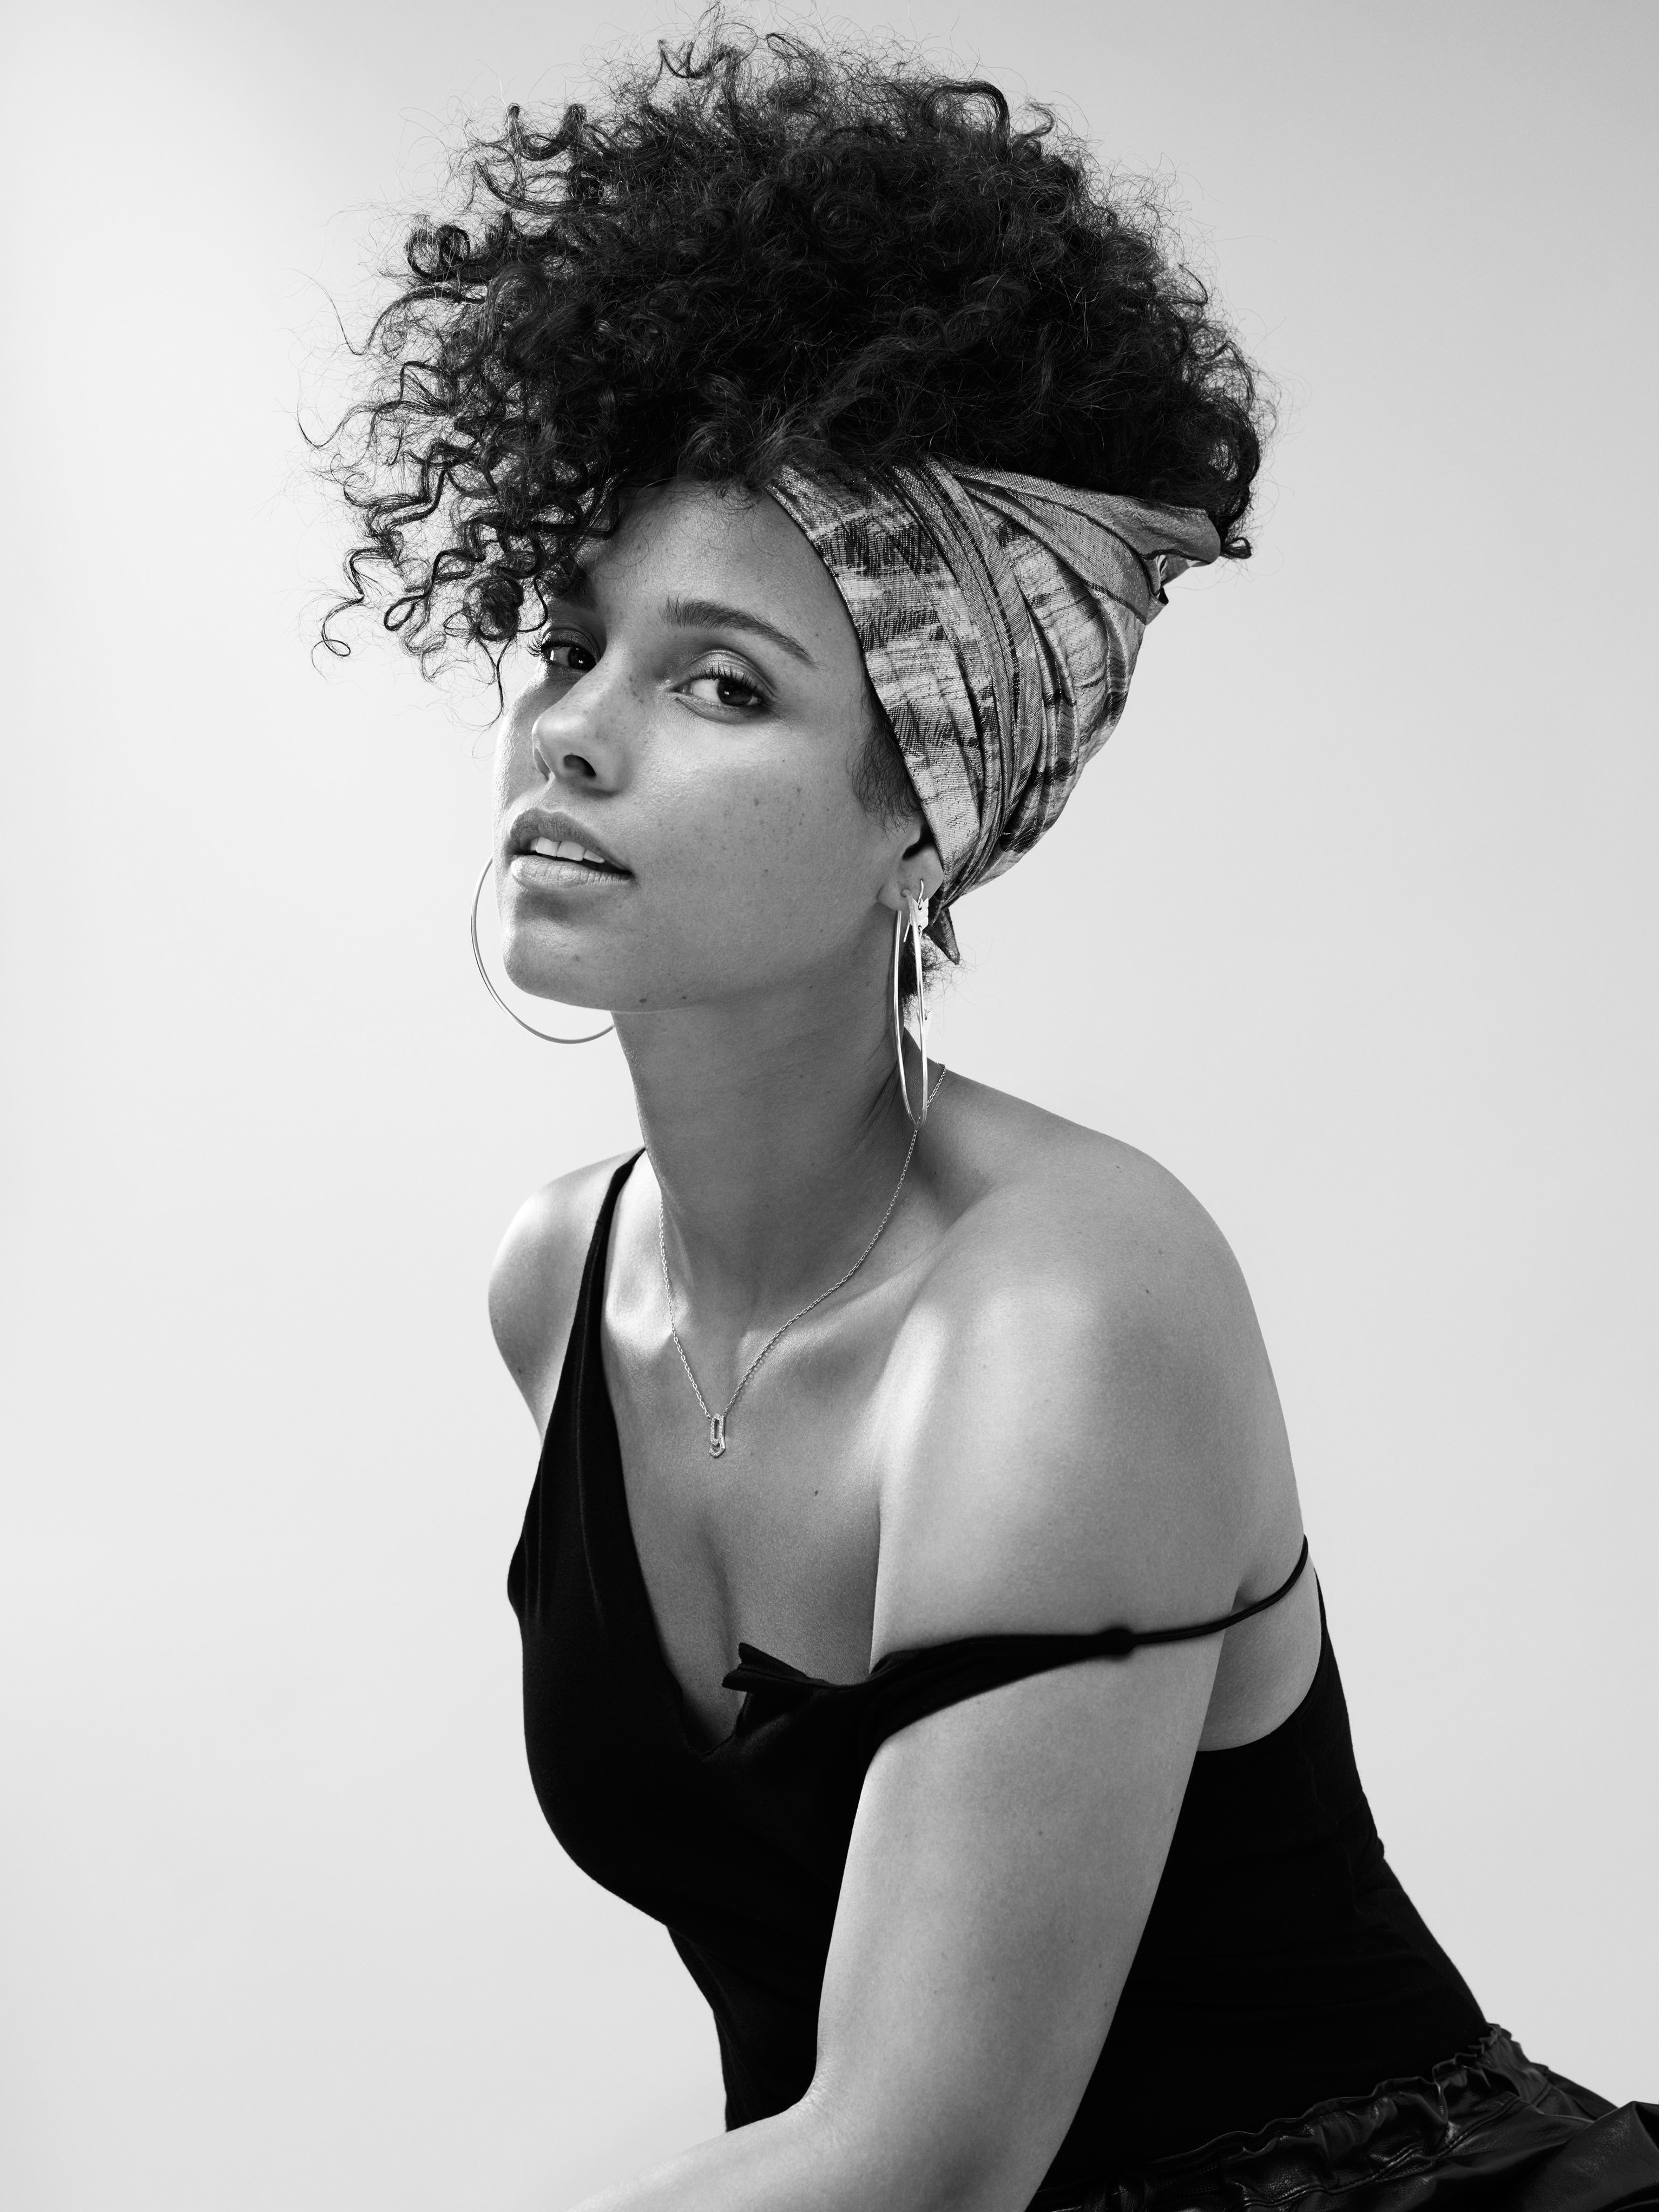 La chanteuse Alicia Keys : ses leçons de vie | PORTER